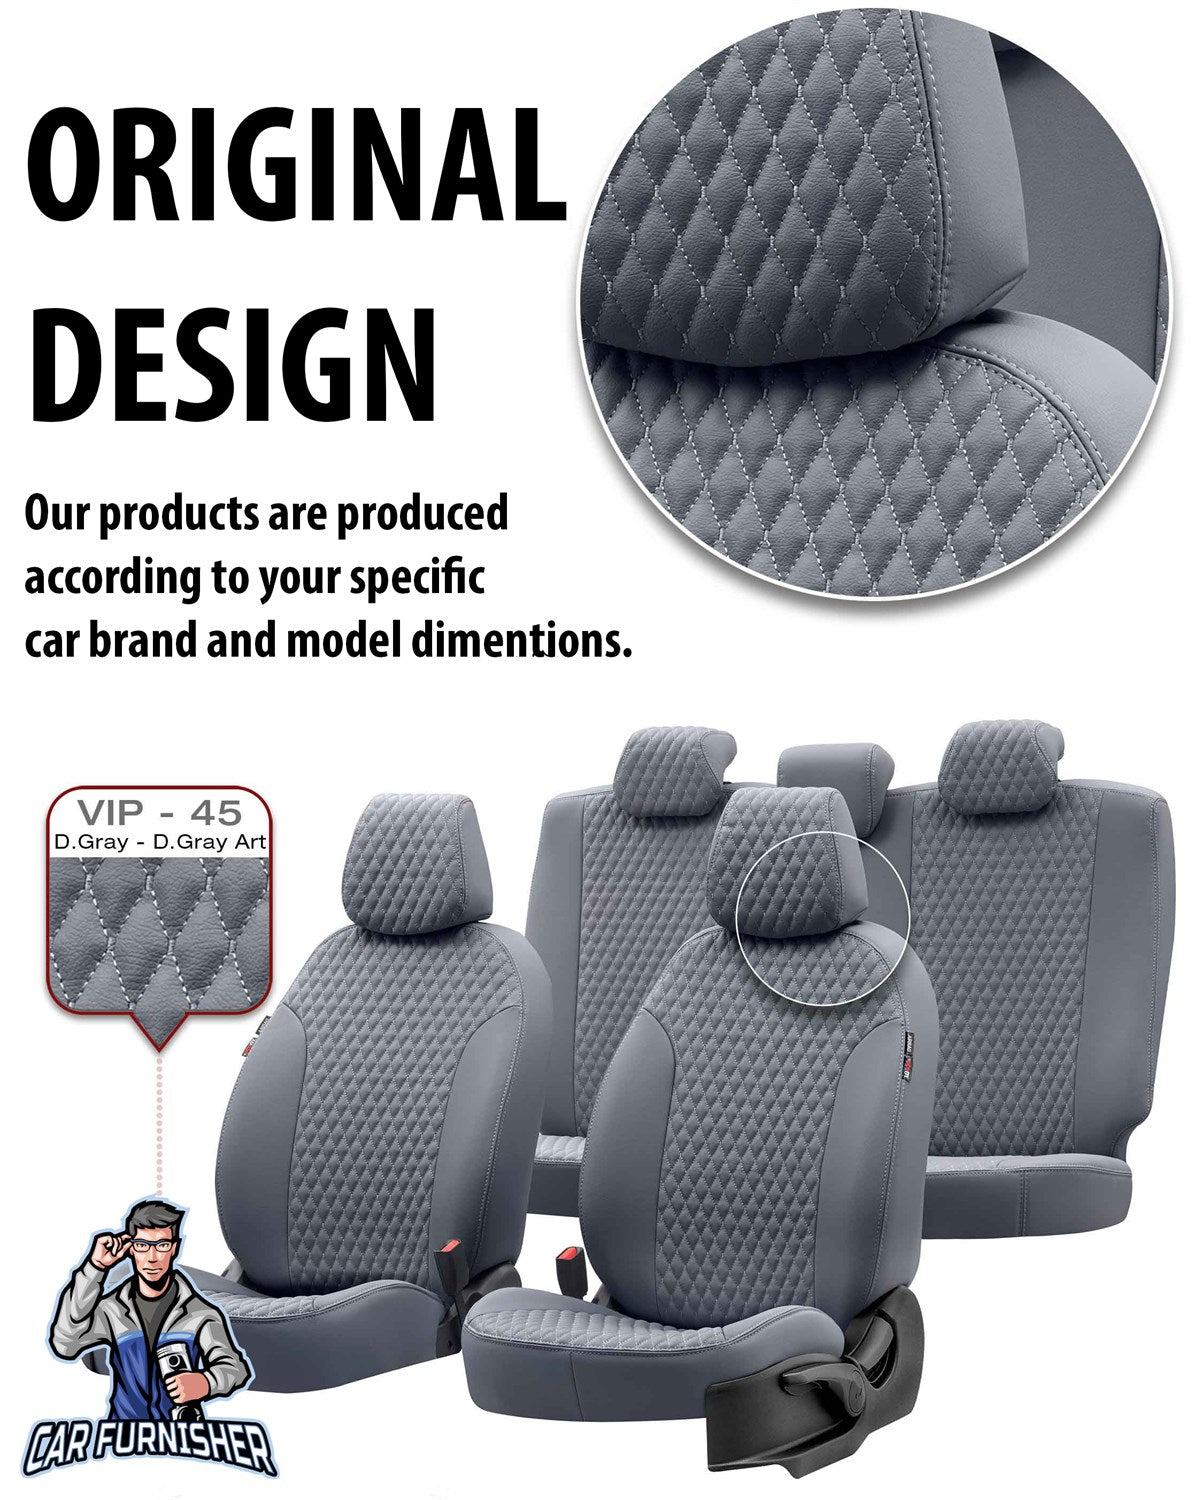 Citroen C-Elysee Seat Covers Amsterdam Leather Design Dark Gray Leather